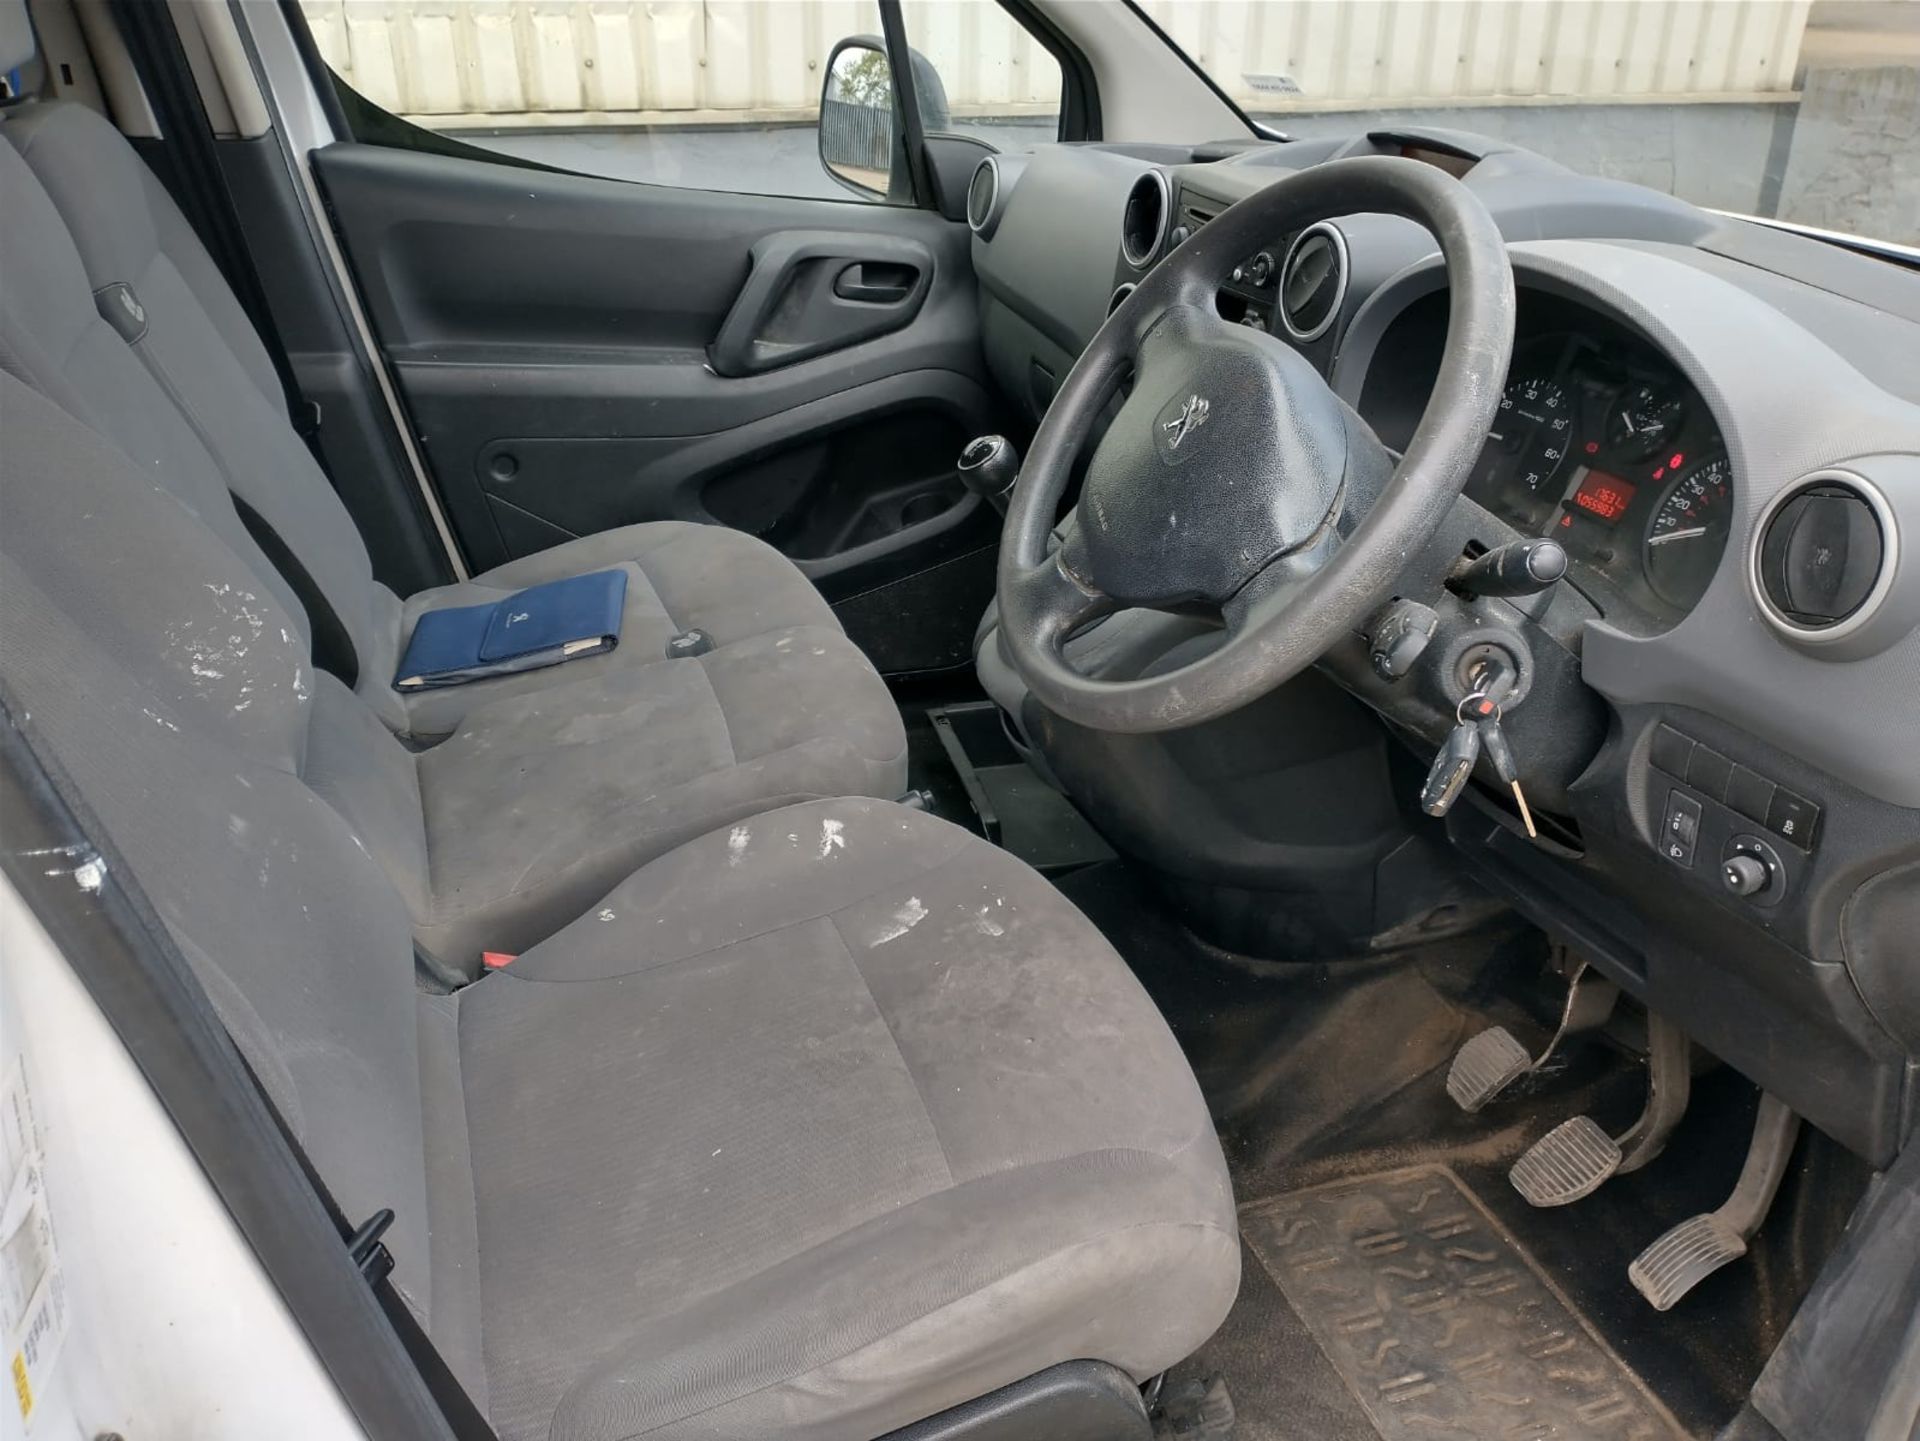 2015 Peugeot Partner Panel Van - CL505 - Location: Corby - Image 9 of 15